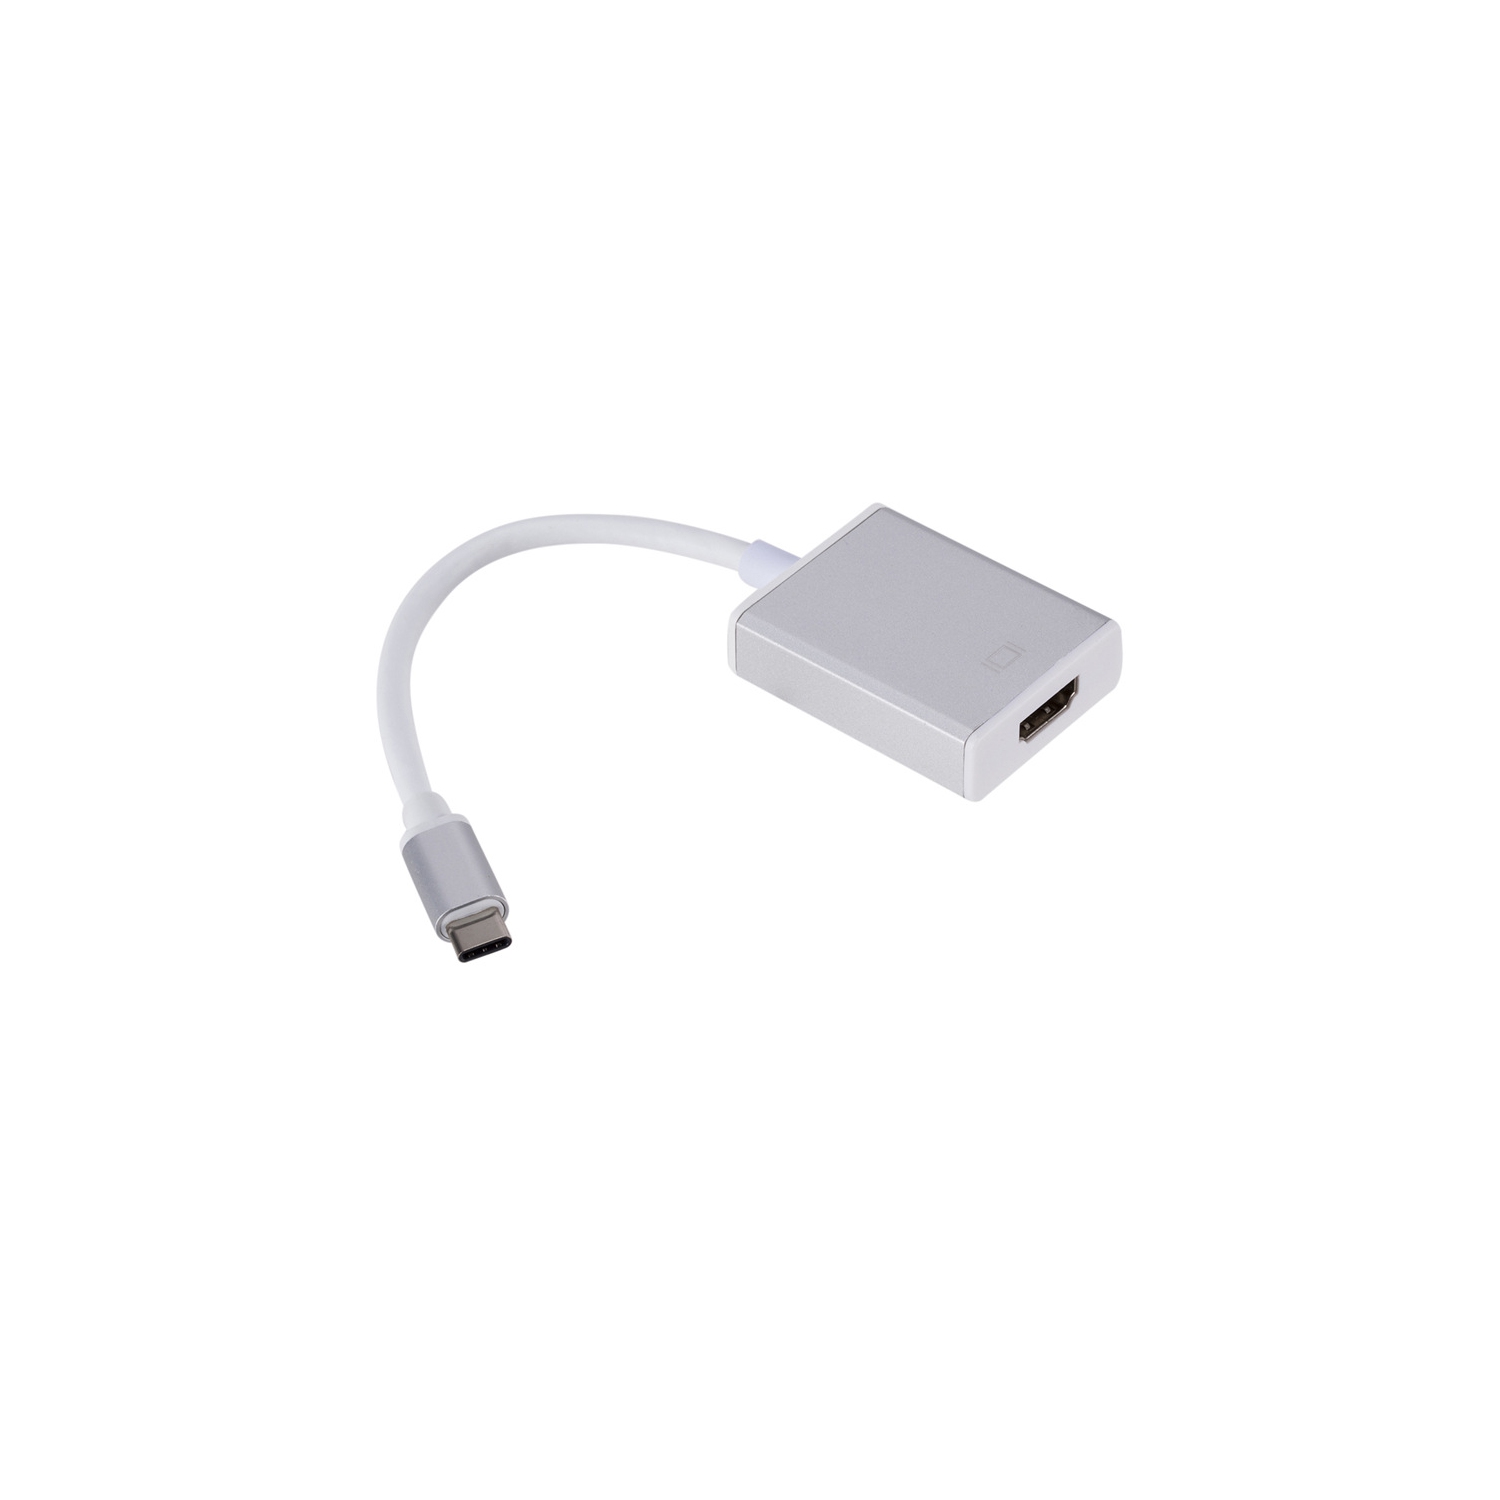 MotionGrey USB C to HDMI Adapter 4K 30Hz [Thunderbolt 3 Compatible] MacBook Pro 2020/2017, Samsung Galaxy S9/S8